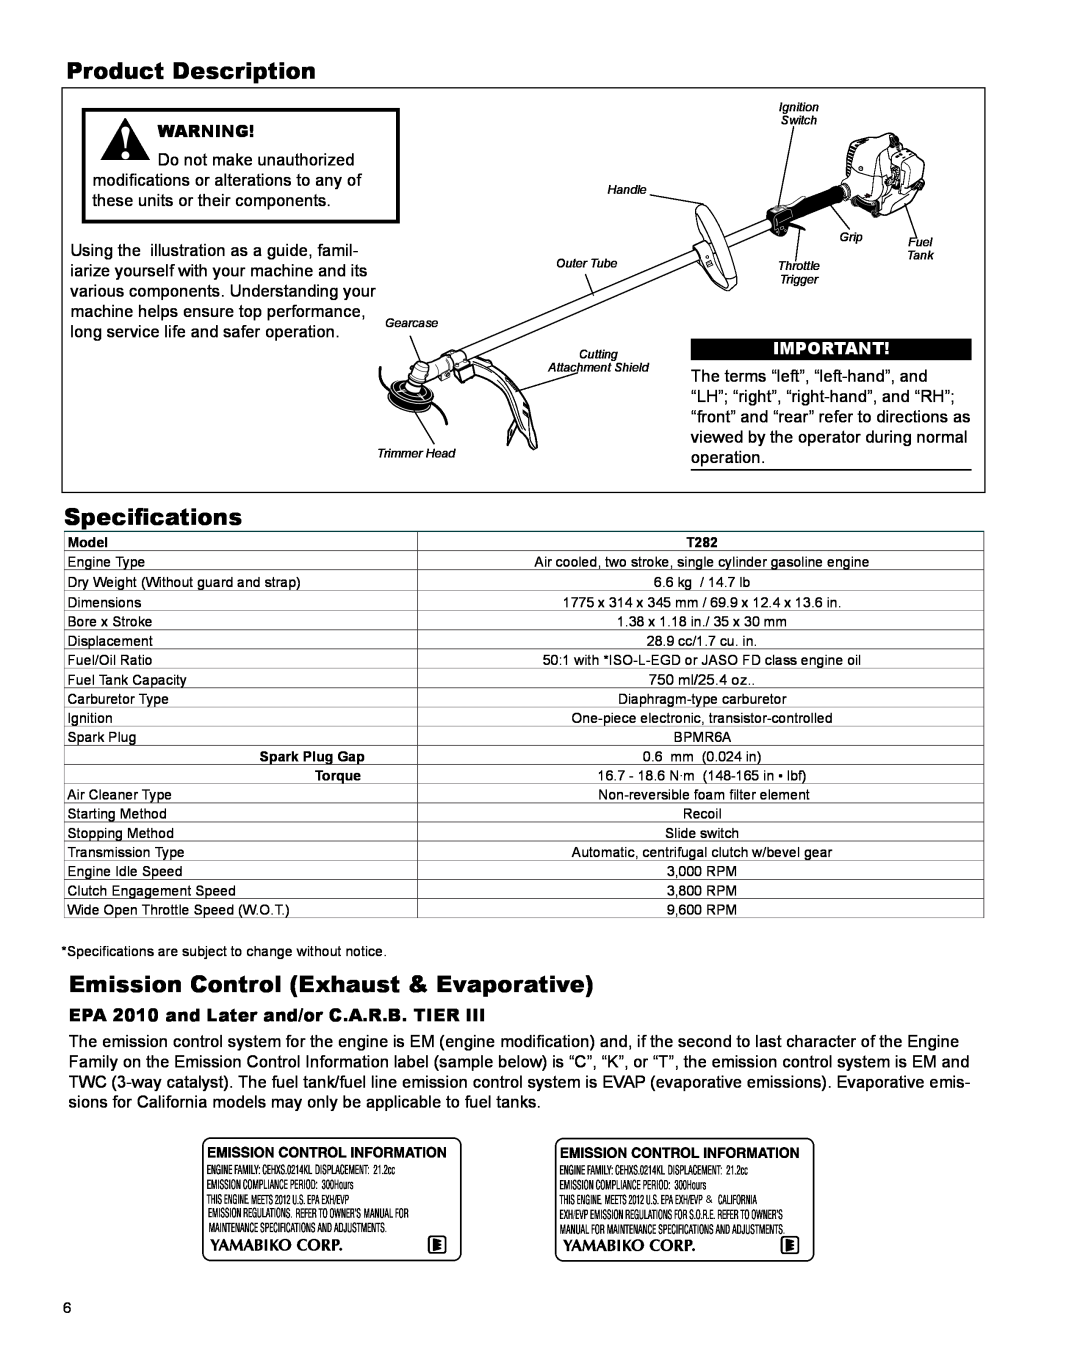 Shindaiwa X7502824801 manual Product Description, Specifications, Emission Control Exhaust & Evaporative 